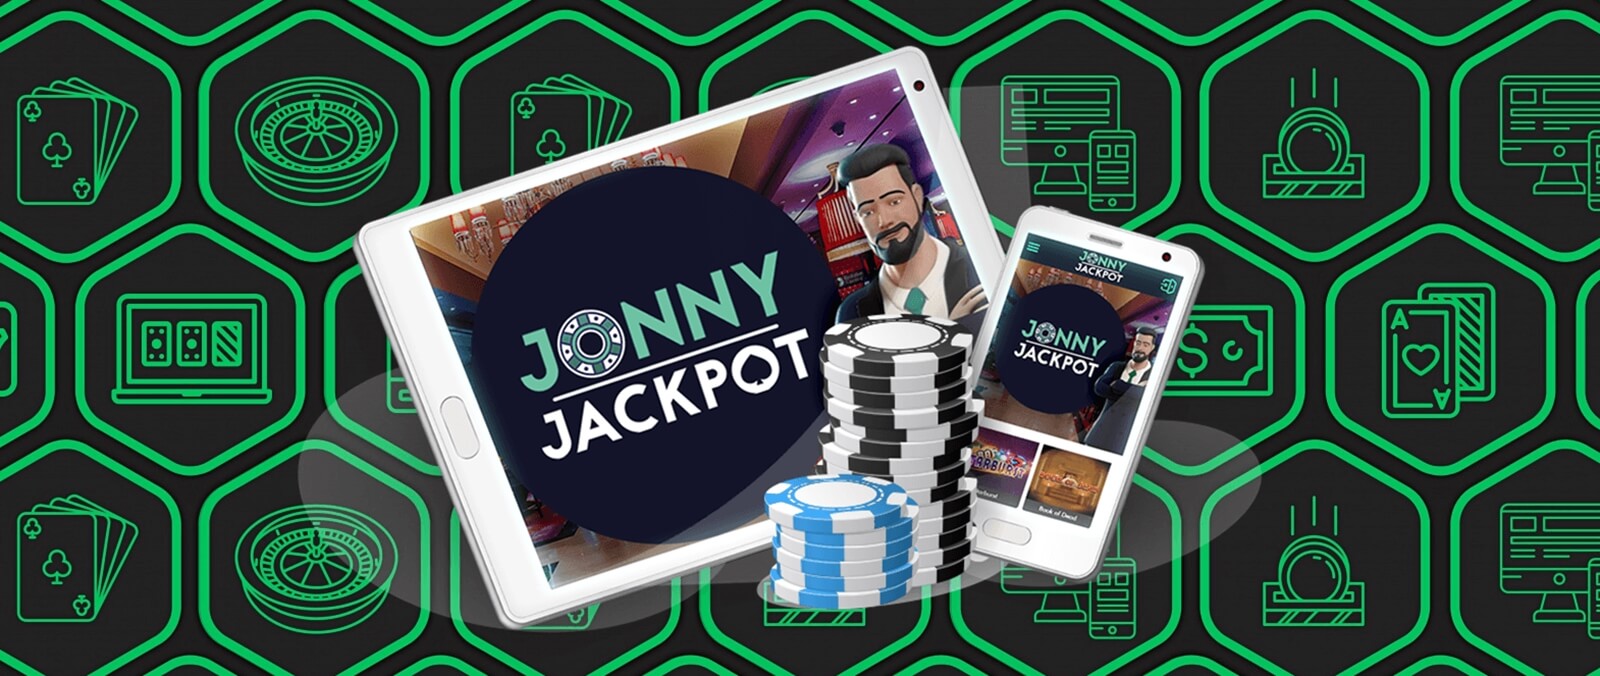 Jonny Jackpot Mobile Casino NZ